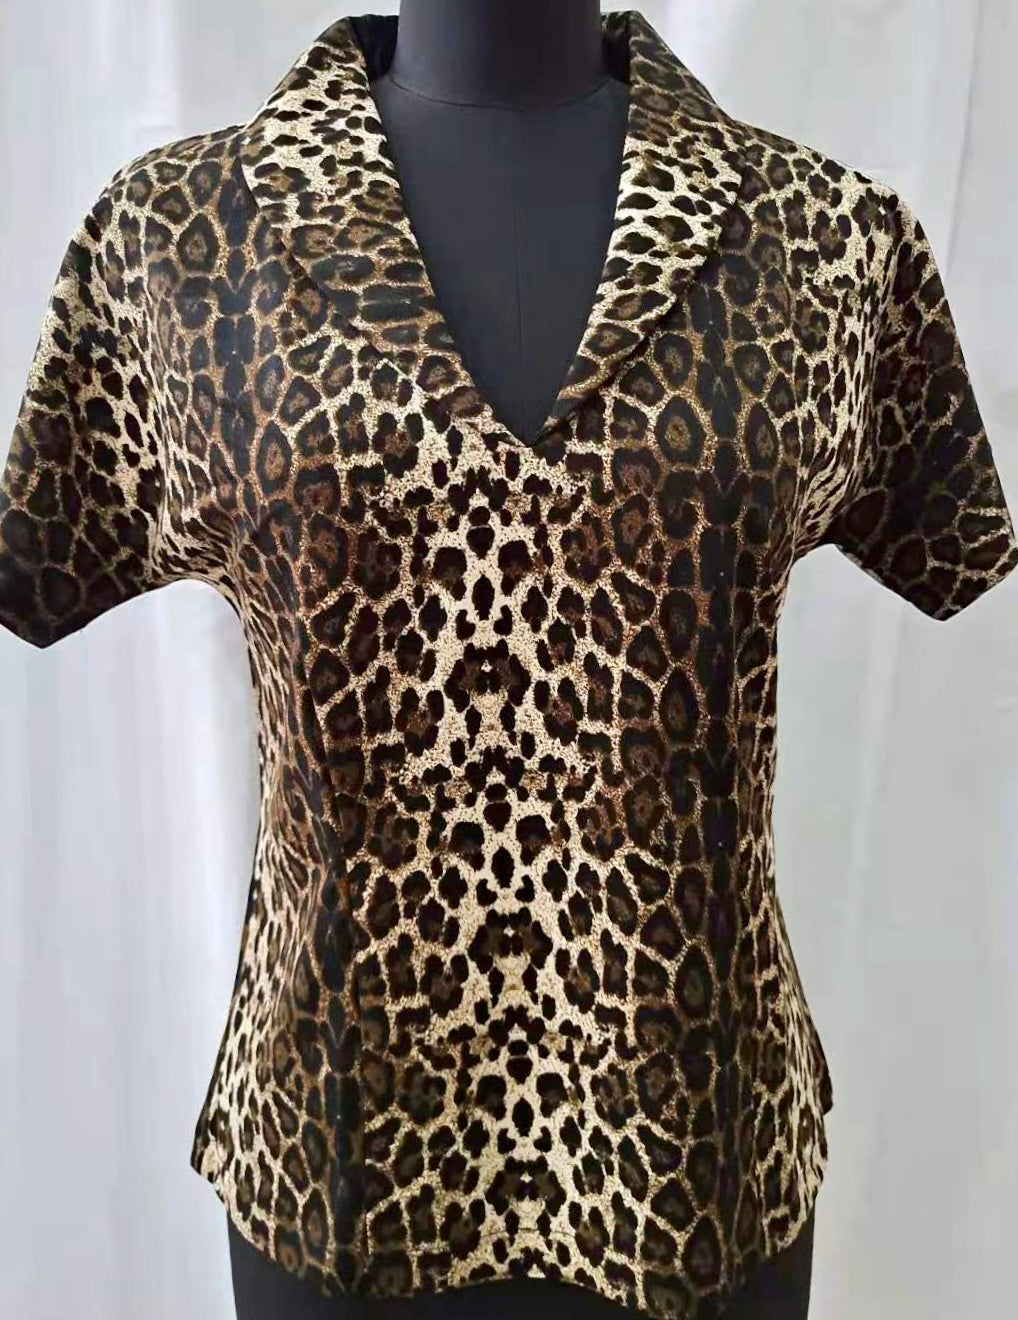 Suzie leopard print vintage 1950s style stretch top S to 3XL